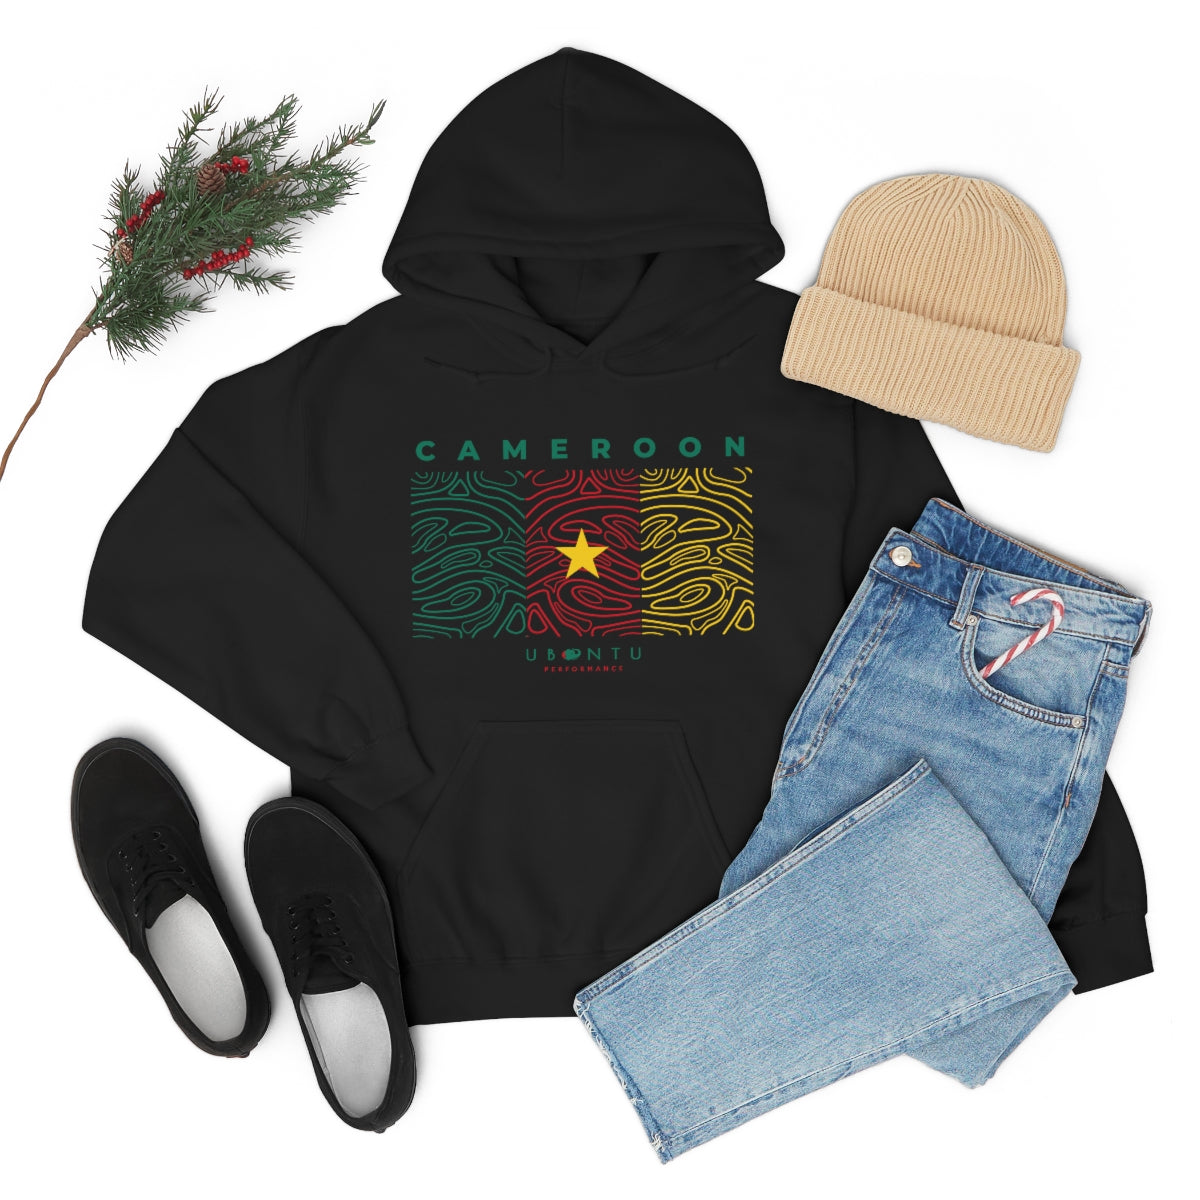 Cameroon flag colors unisex Hooded Sweatshirt soccer football fan gift hoodie